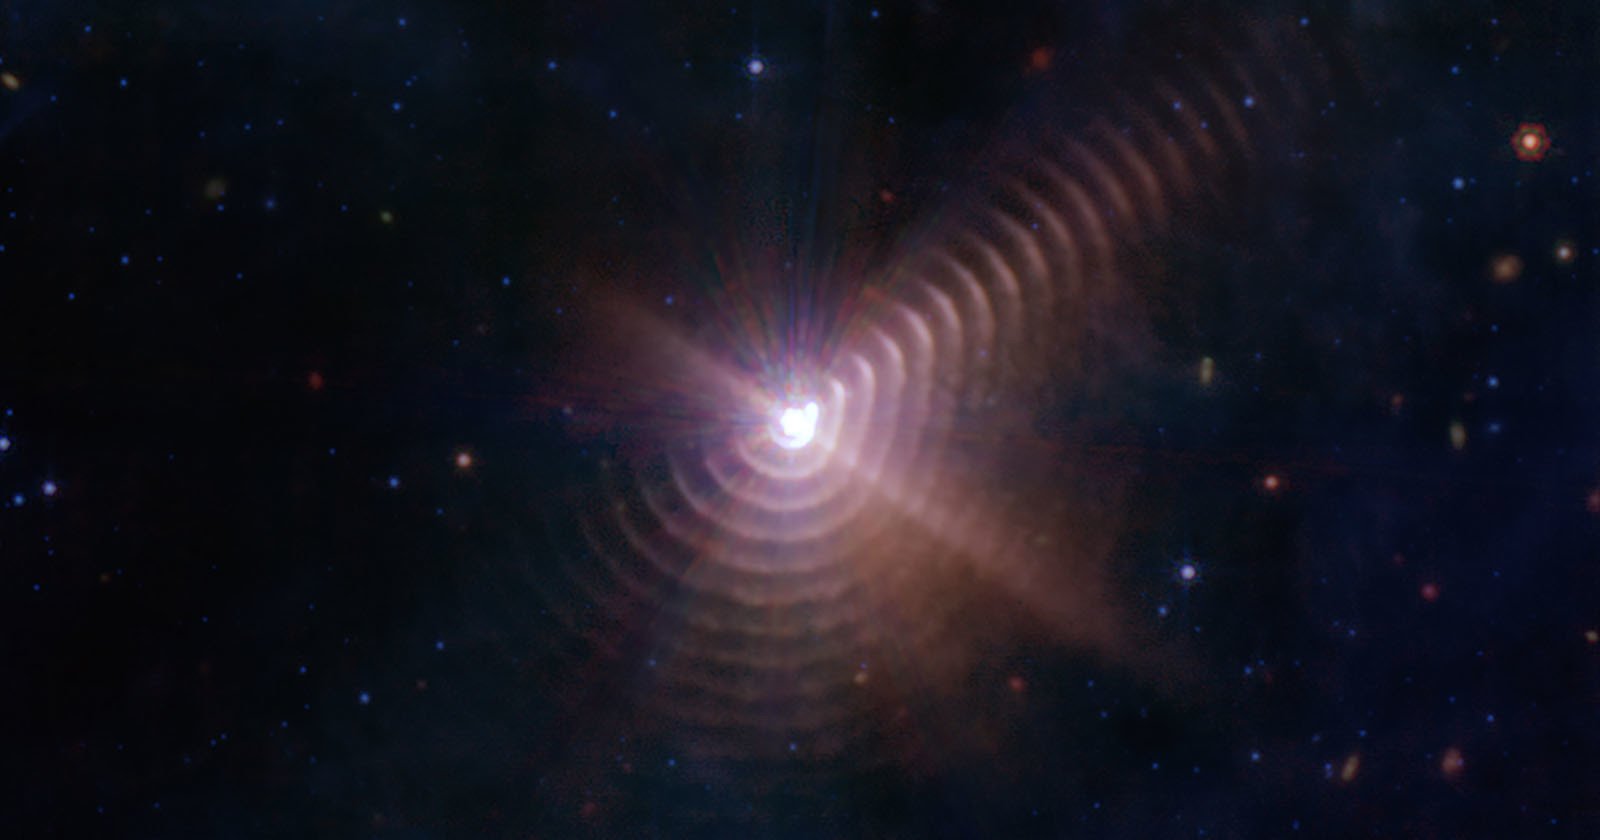  james webb telescope captures cosmic dust fingerprint 